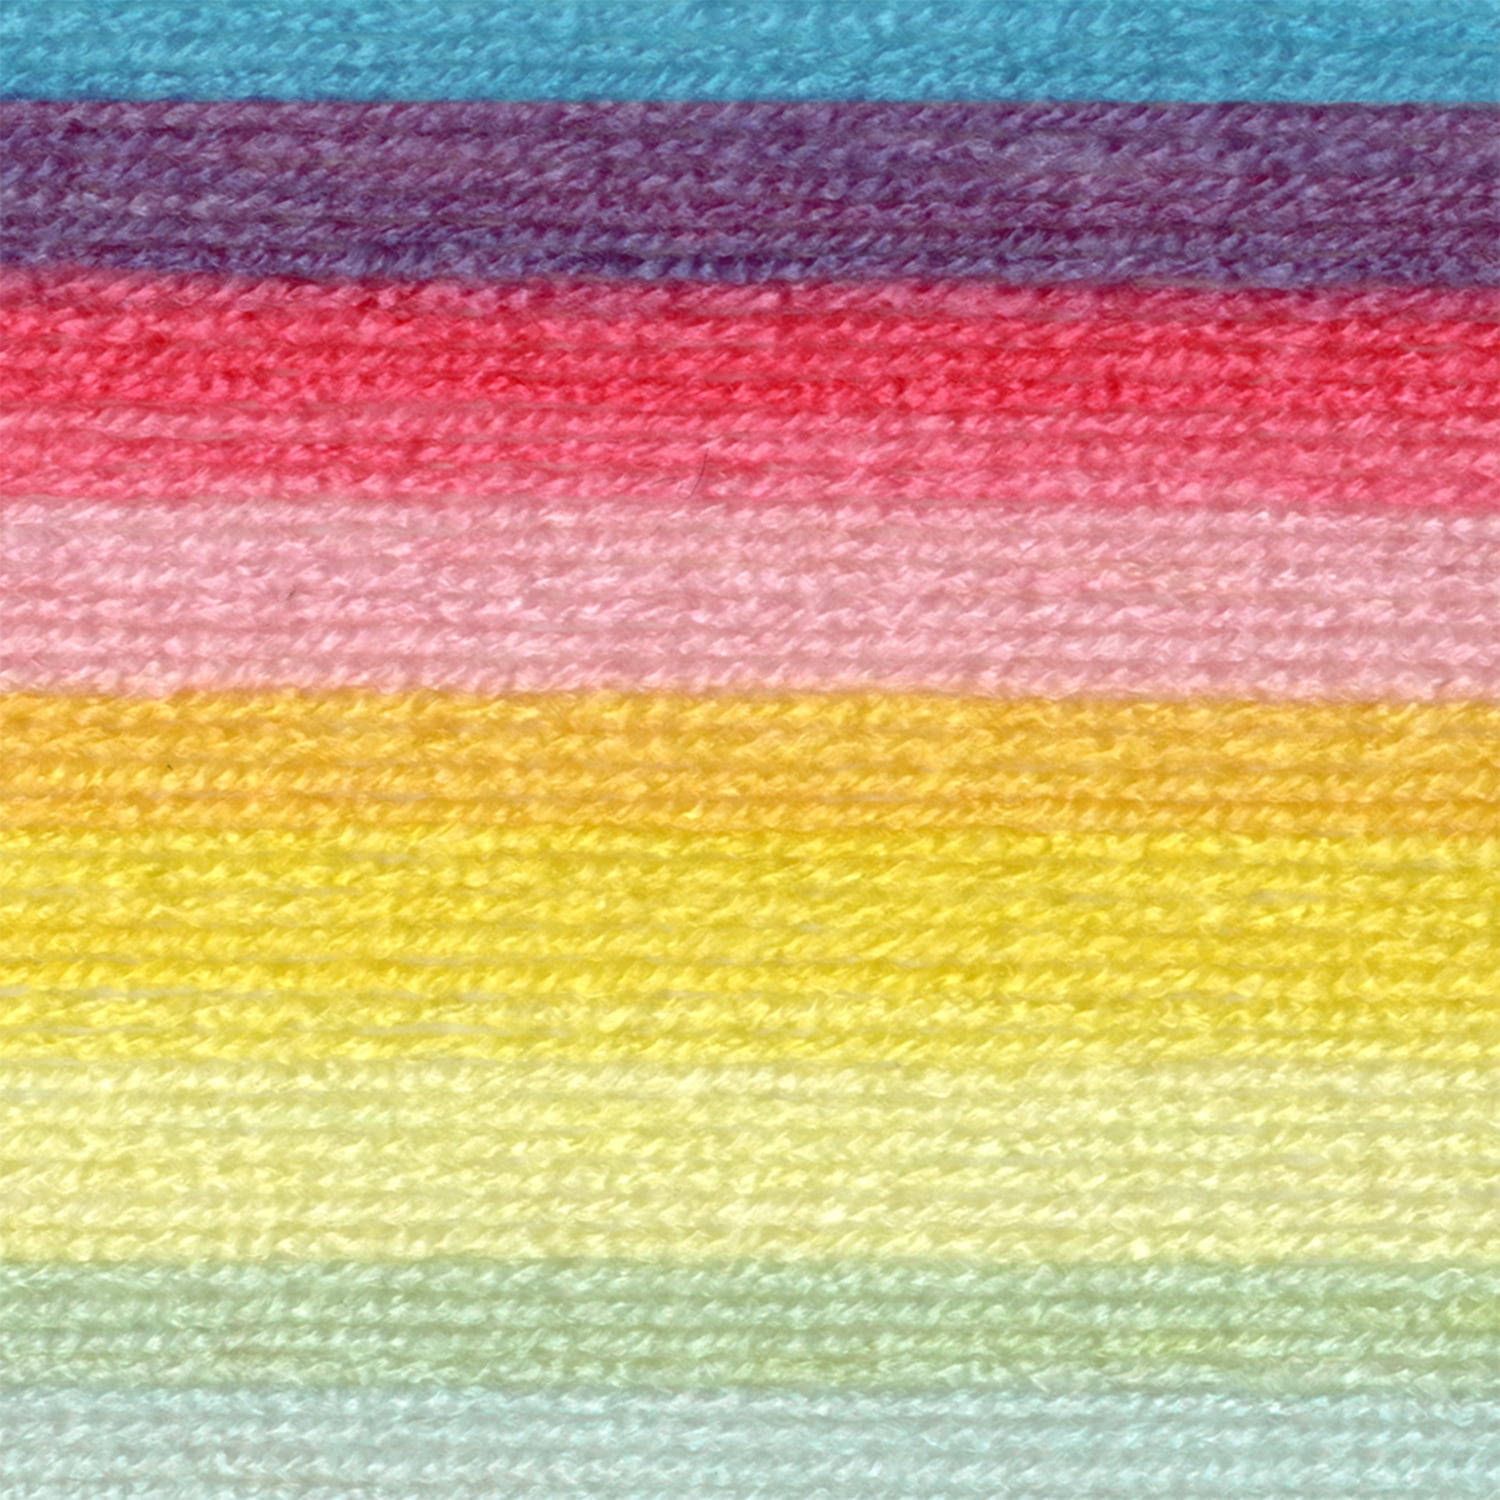 Lion Brand Yarn Mandala Baby Rainbow Falls Self-Striping Baby Light Acrylic Multi-color  Yarn 